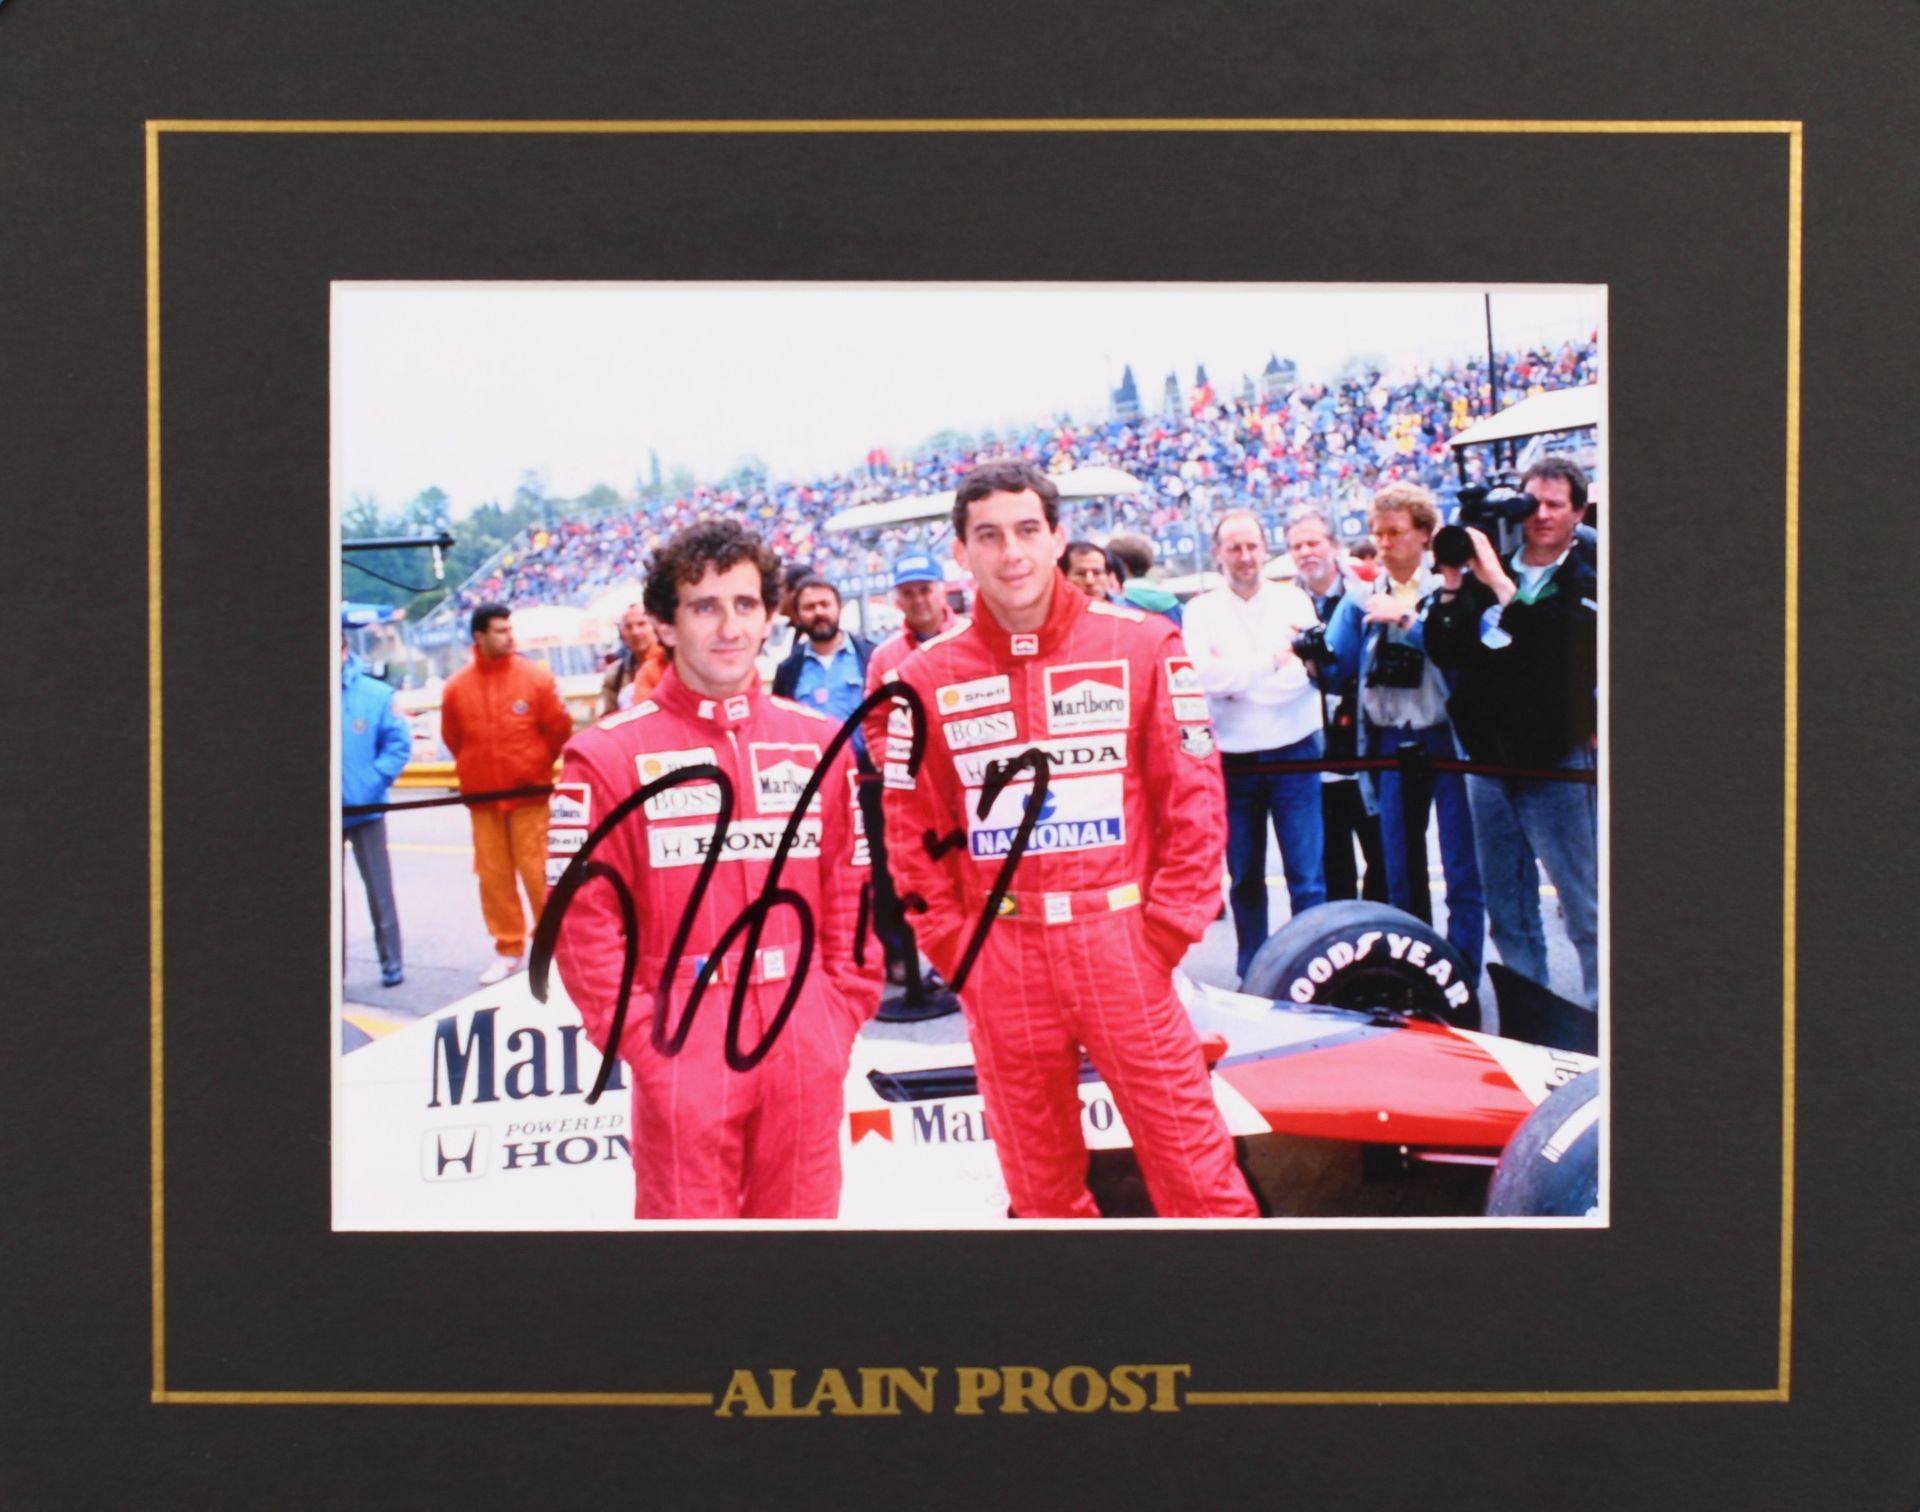 Null 阿兰-普罗斯特车手在艾尔顿-塞纳的陪同下与麦克拉伦-本田车队的签名照片。
他将赢得4个世界锦标赛冠军。彩色照片。格式为15x20厘米，24x30厘米的&hellip;